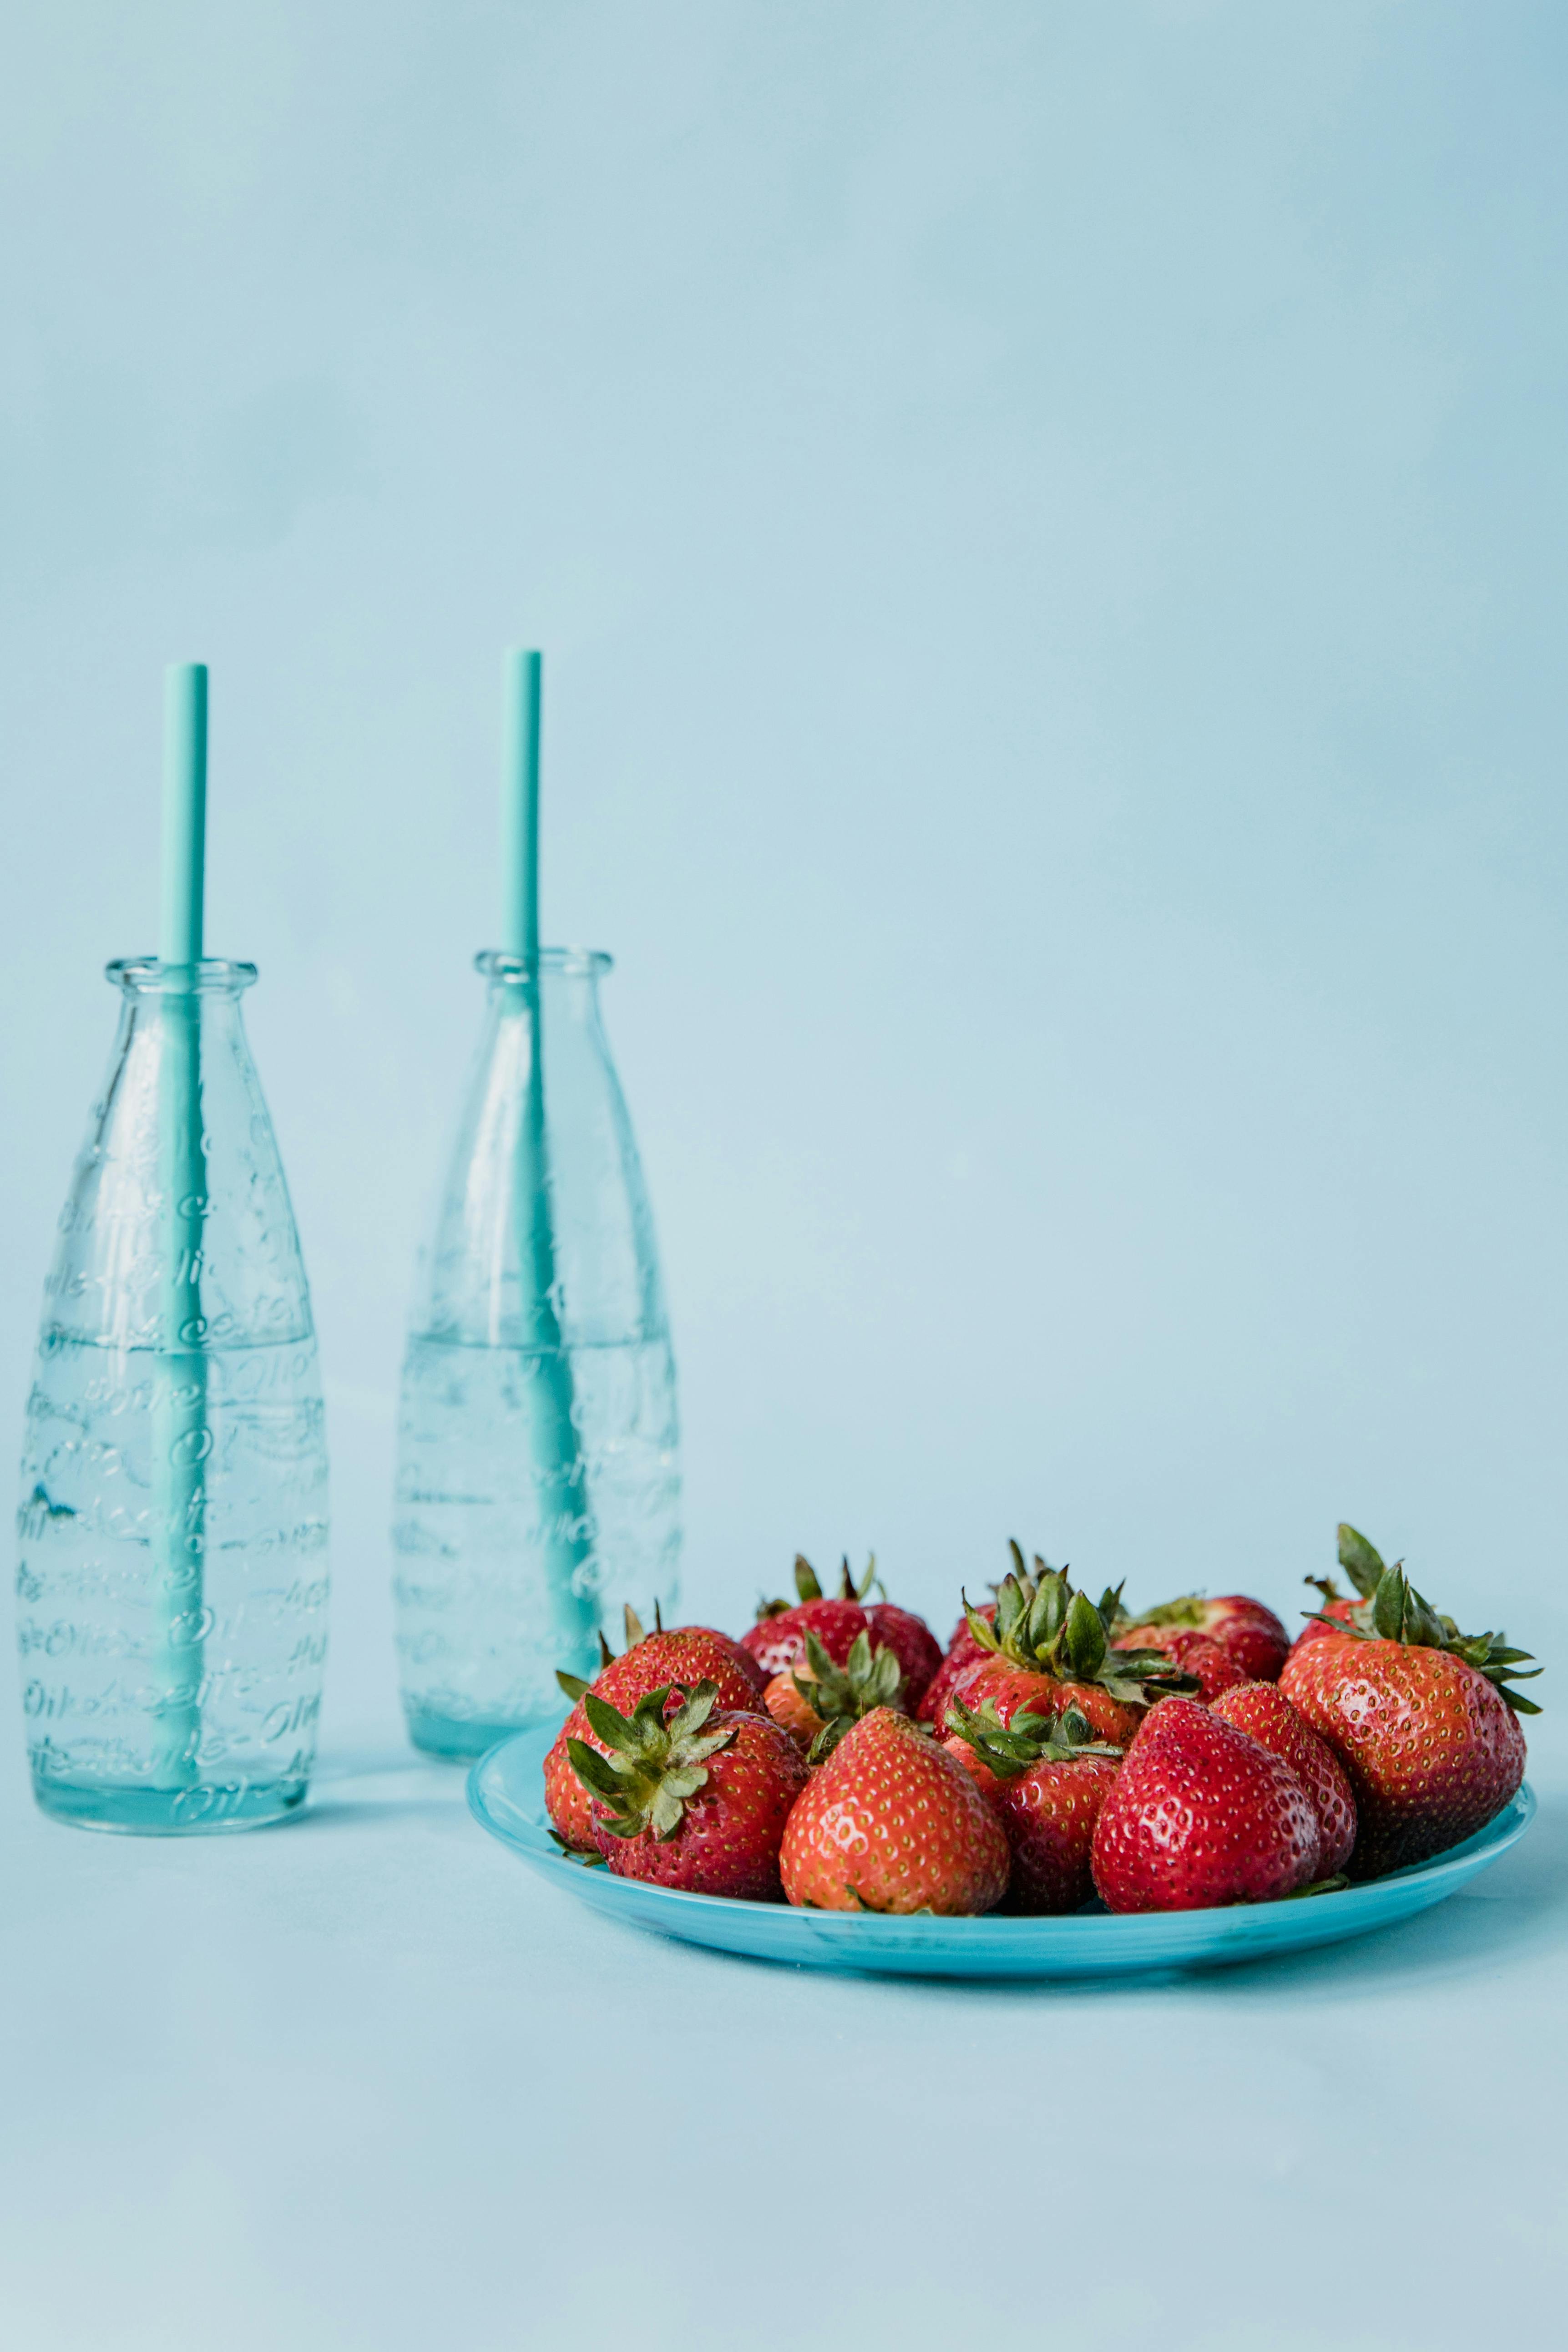 Berry Fresh Glass Water Bottle